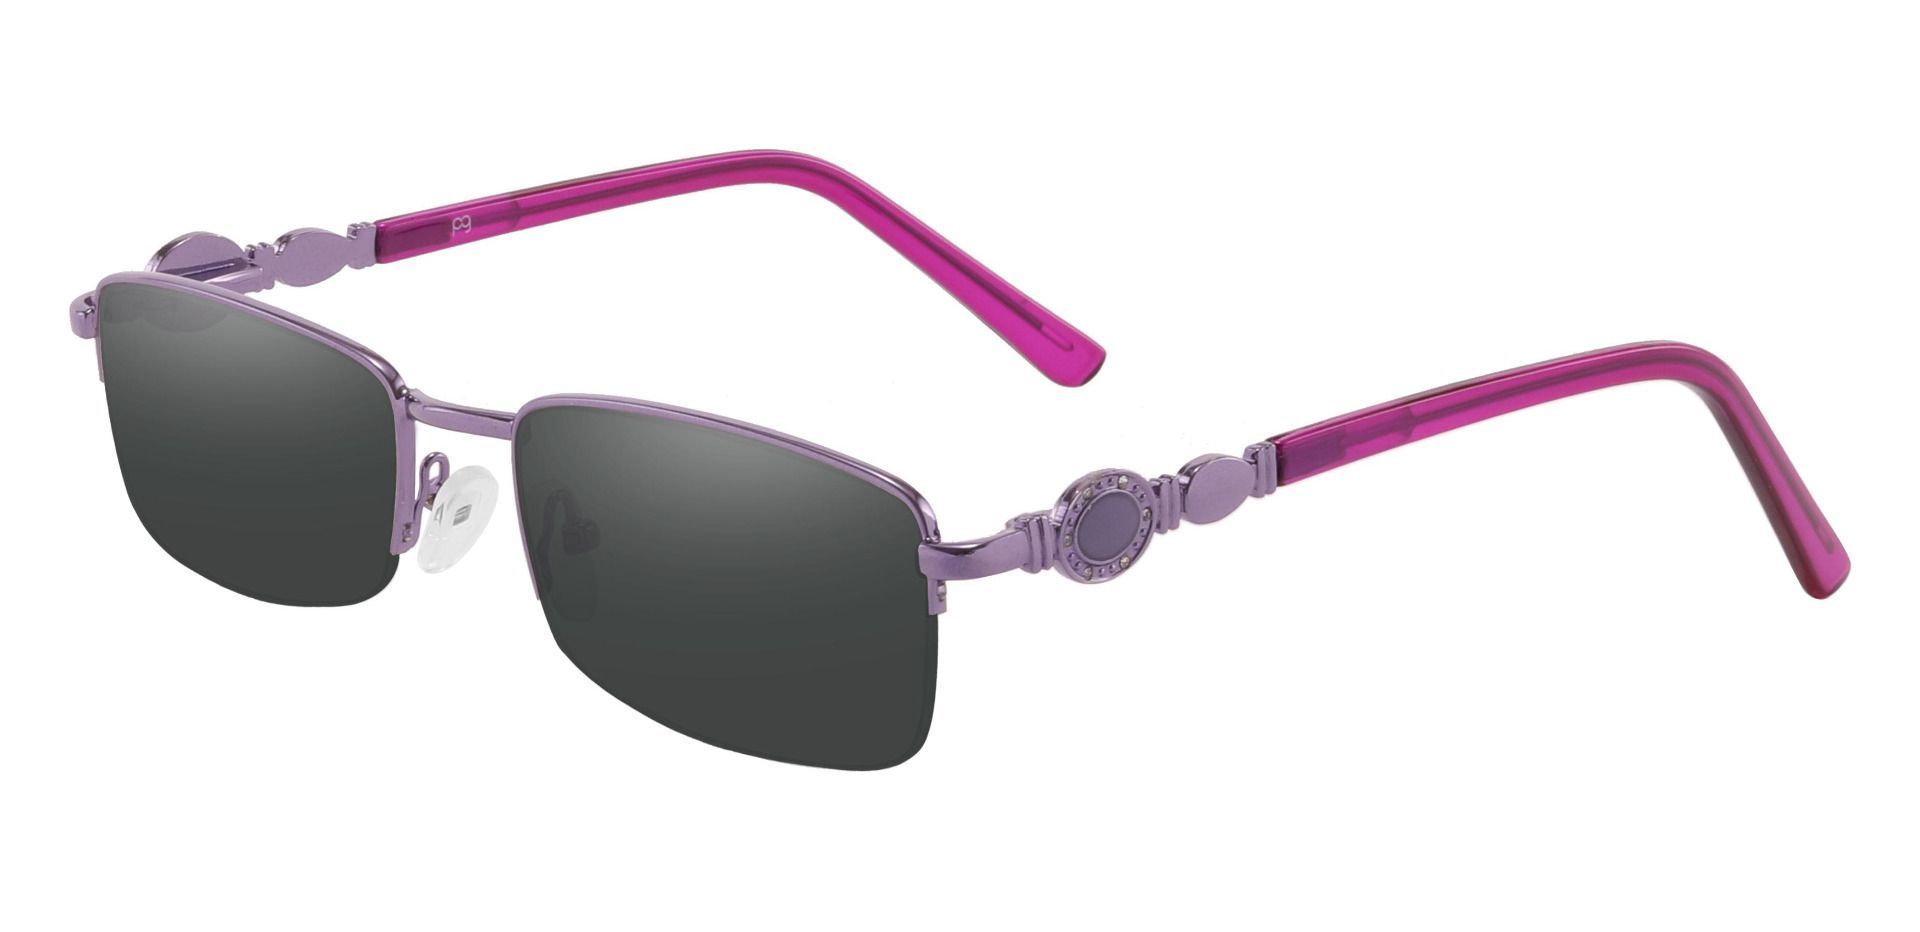 Crowley Rectangle Prescription Sunglasses - Purple Frame With Gray Lenses